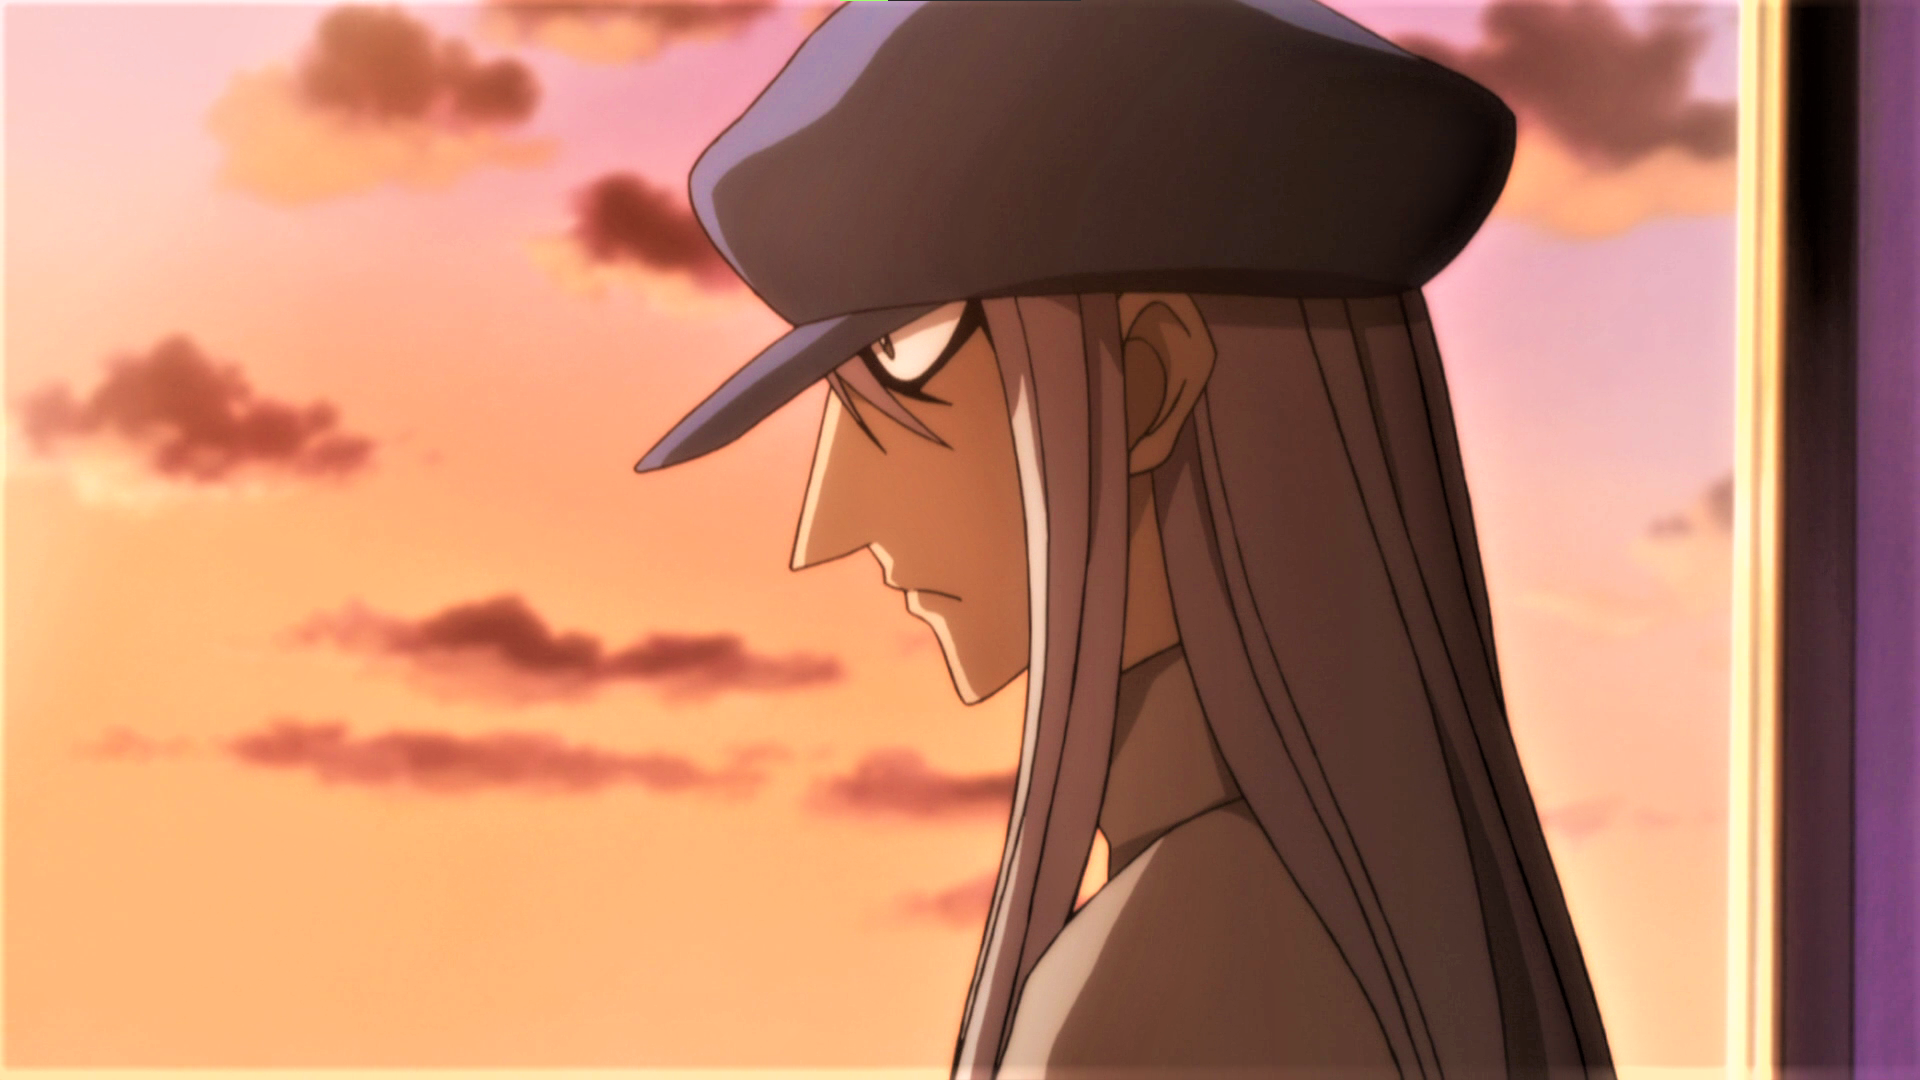 Hunter X Hunter Kite Sunset Clouds Sky White Hair Hat Anime Anime Screenshot Anime Boys Sunset Glow 1920x1080